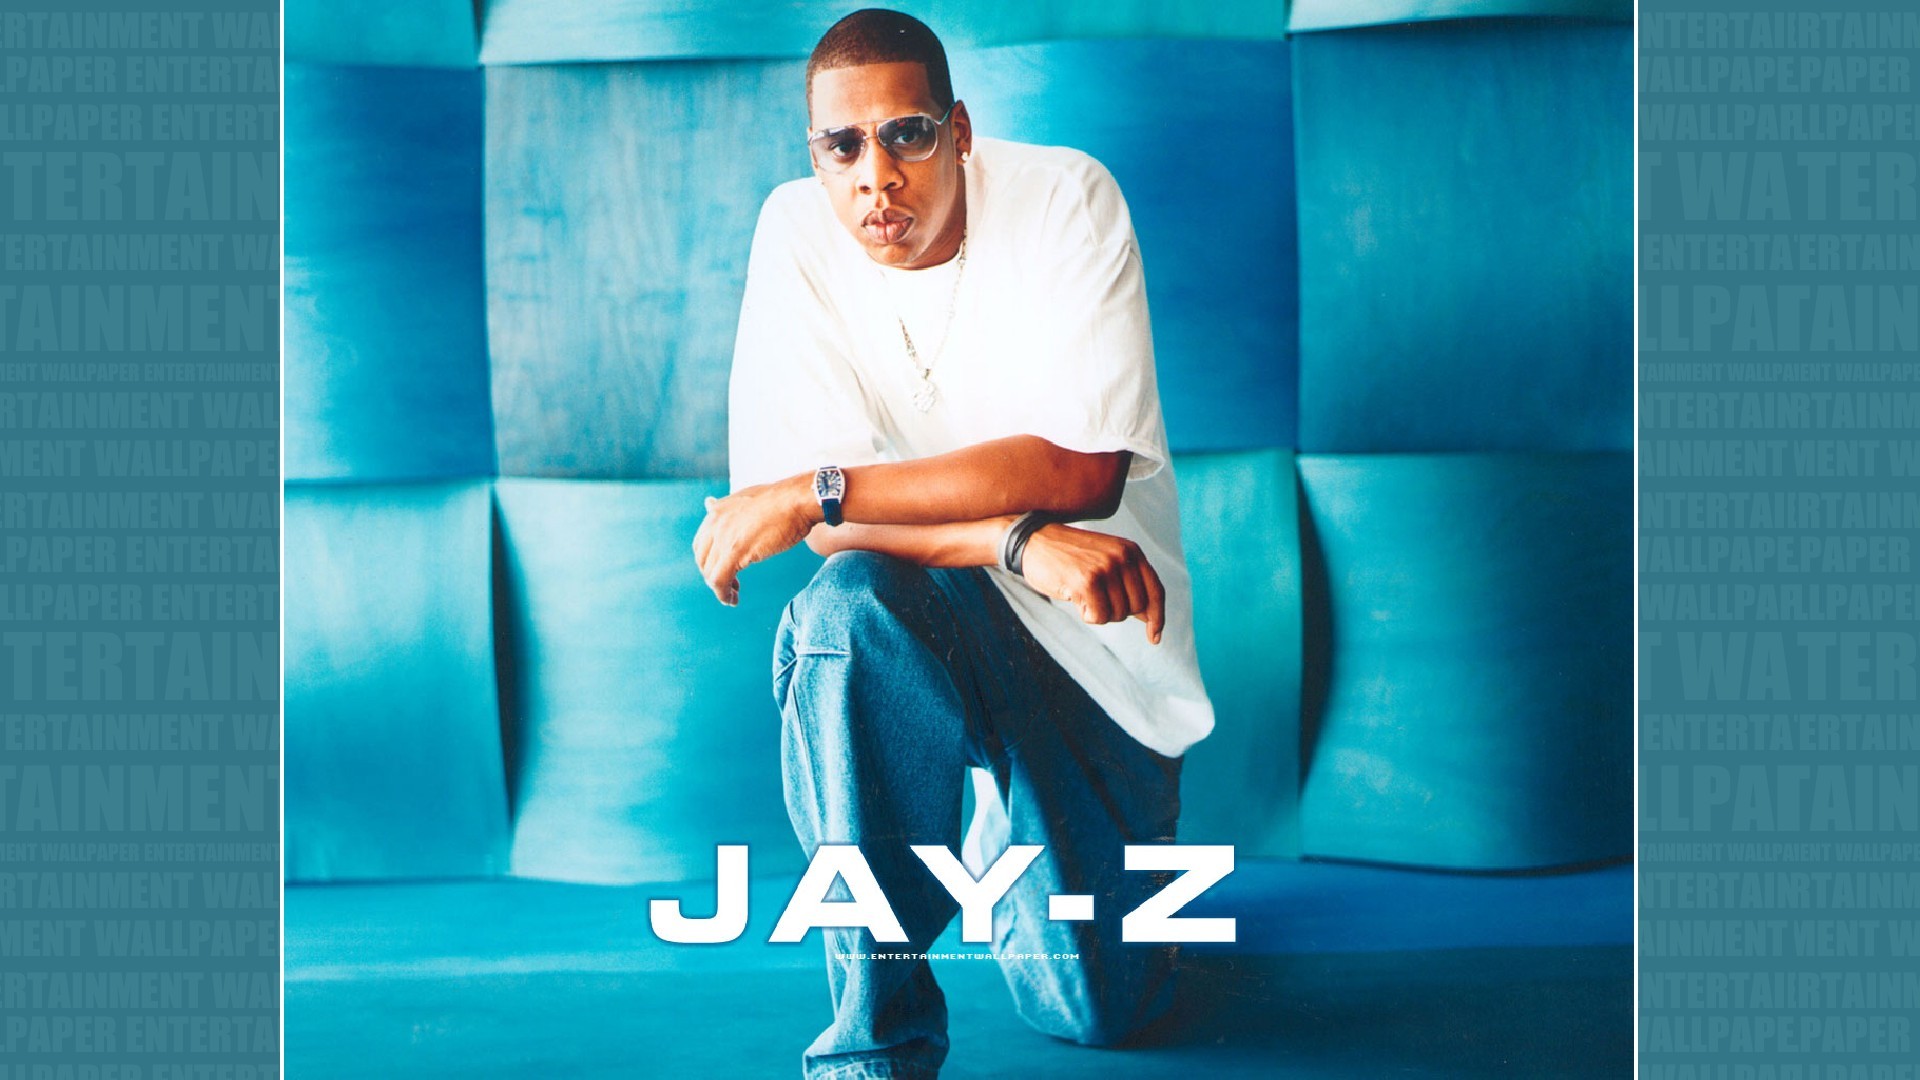 Jay Z Wallpaper – Original size, download now